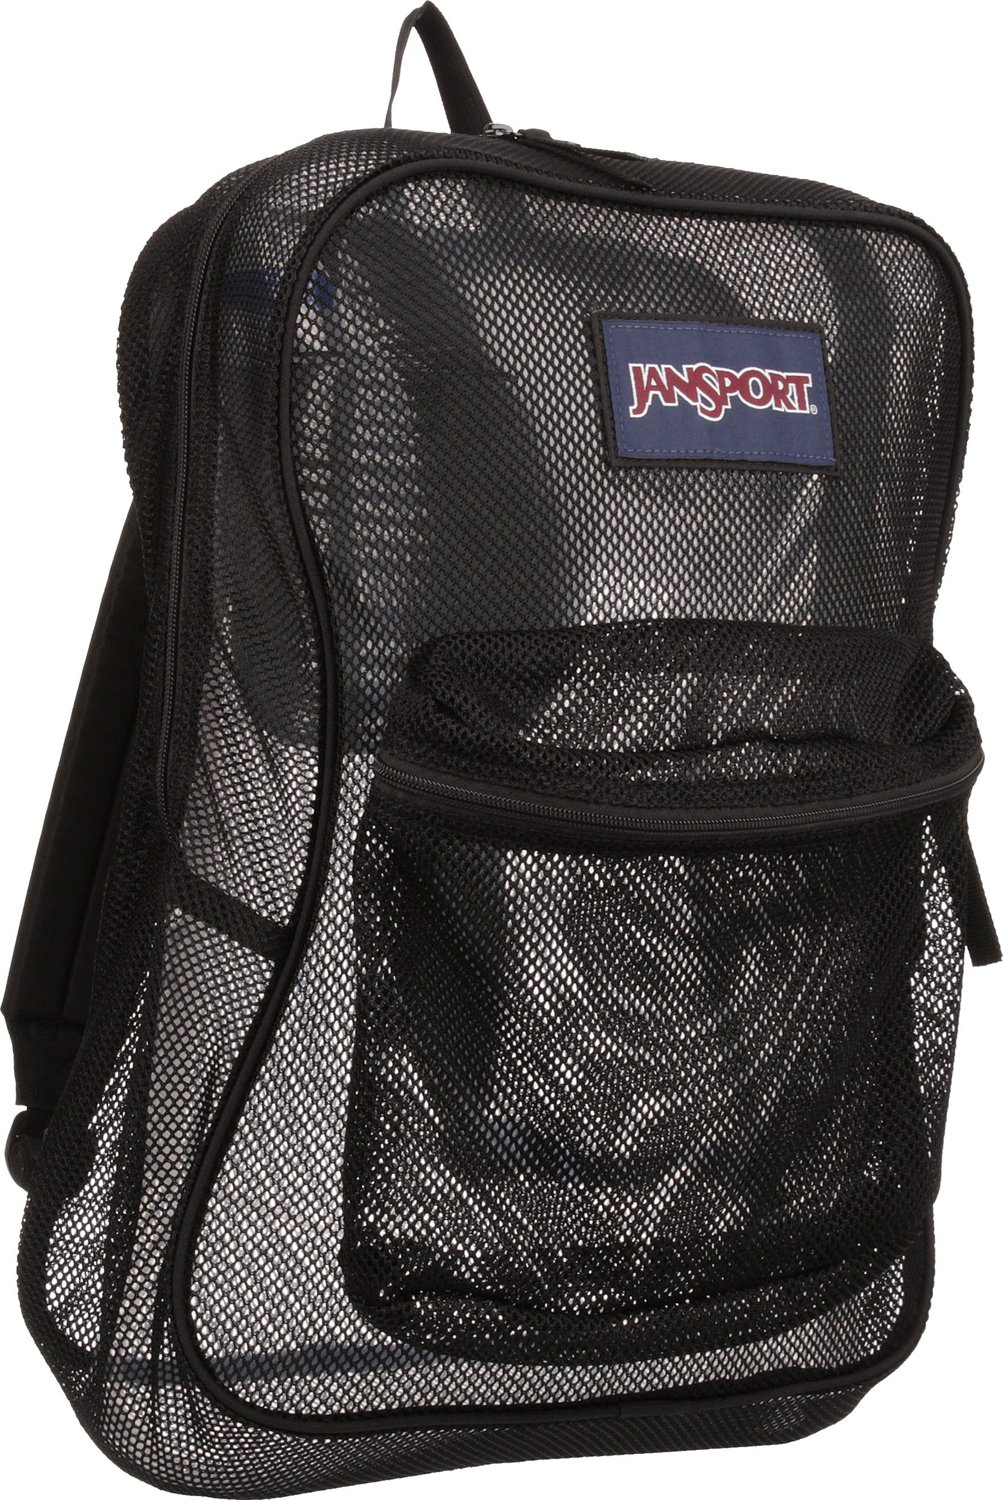 converse classic backpack book bag